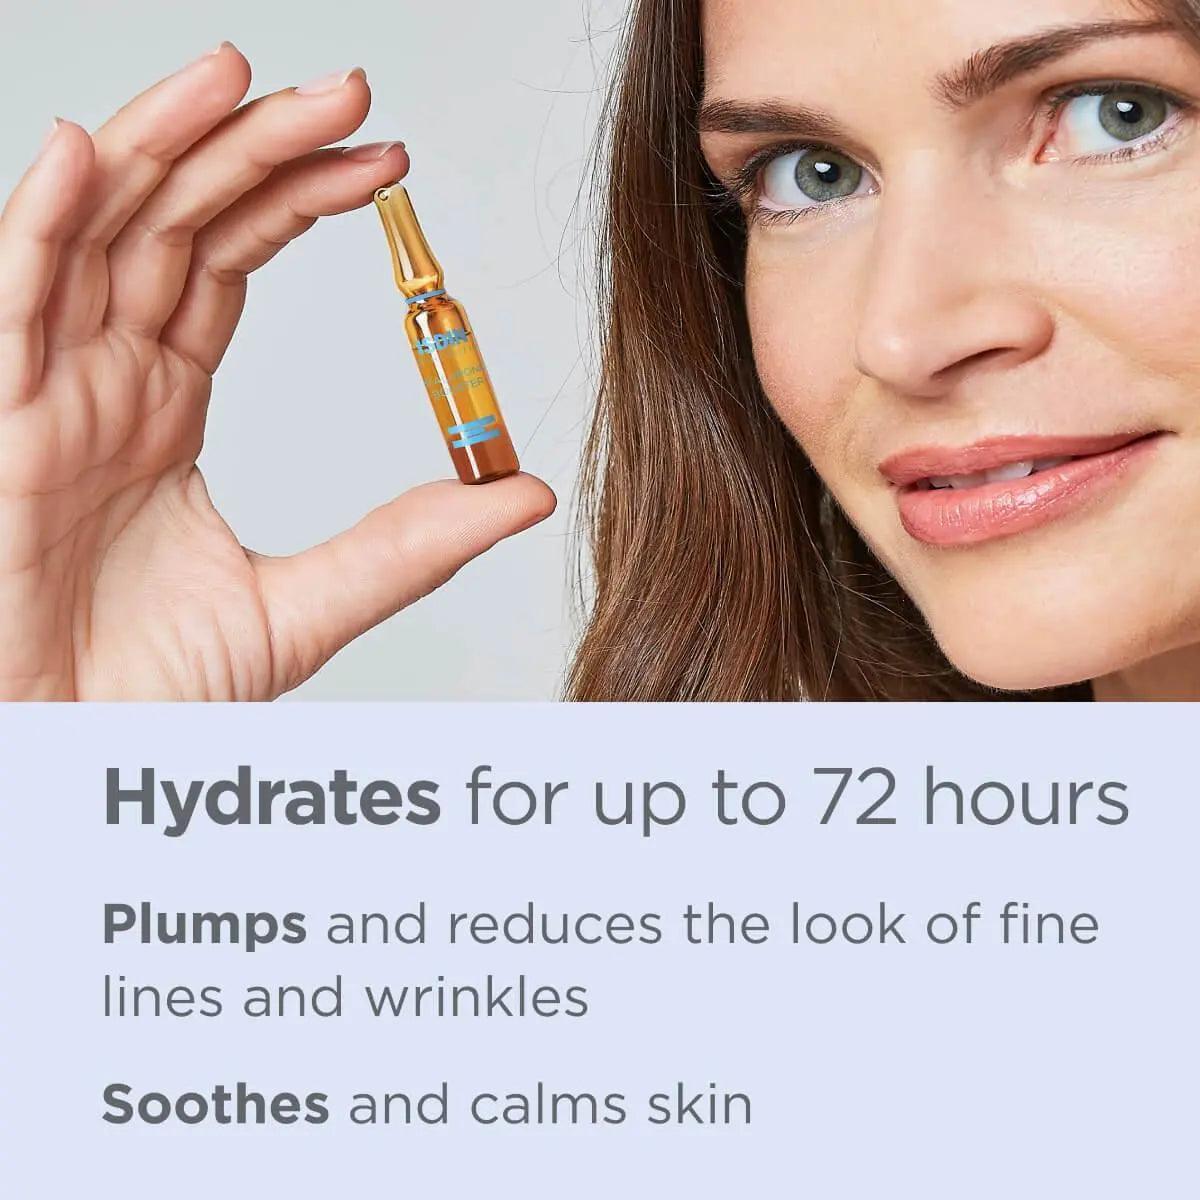 Isdinceutics Hyaluronic Booster Hydrating Serum 10un - Wellness Shoppee